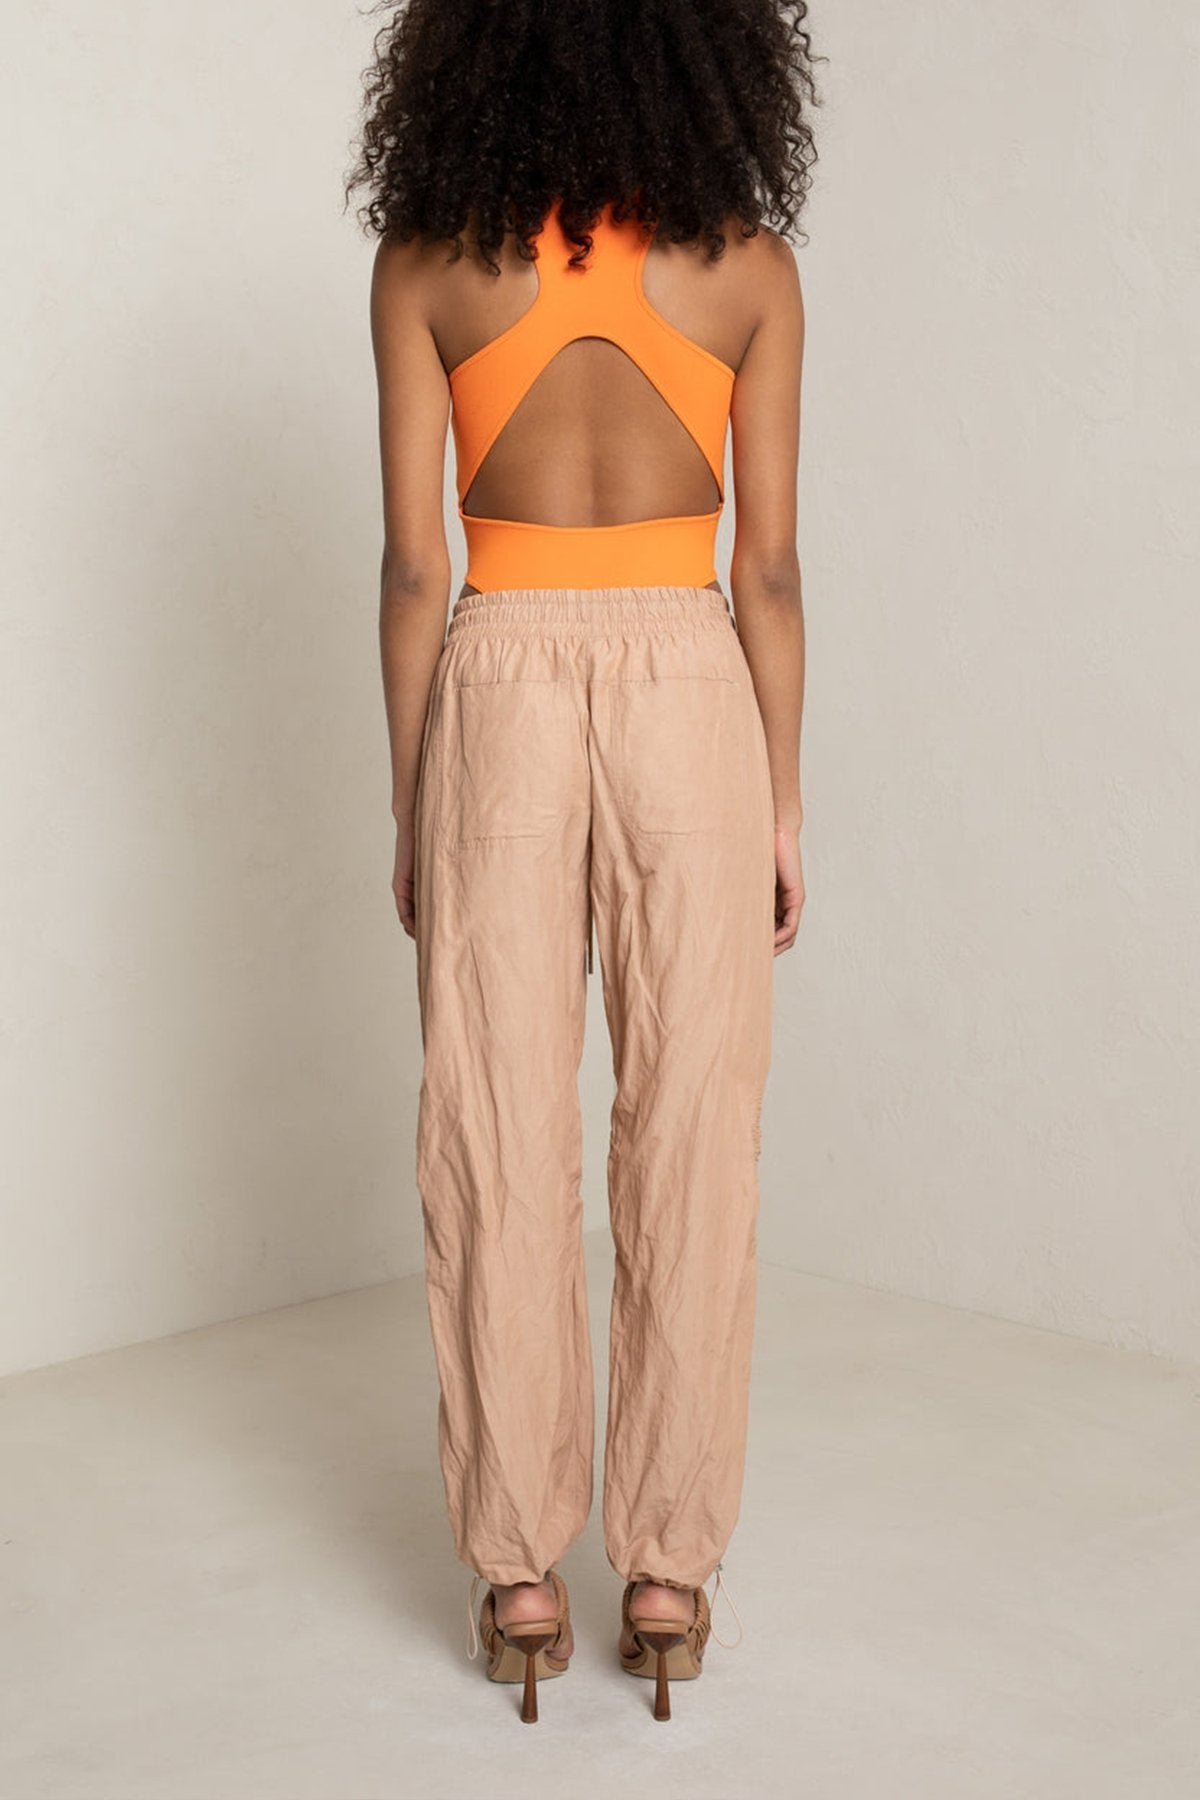 Pierce Knit Bodysuit in Orange Twist - shop-olivia.com